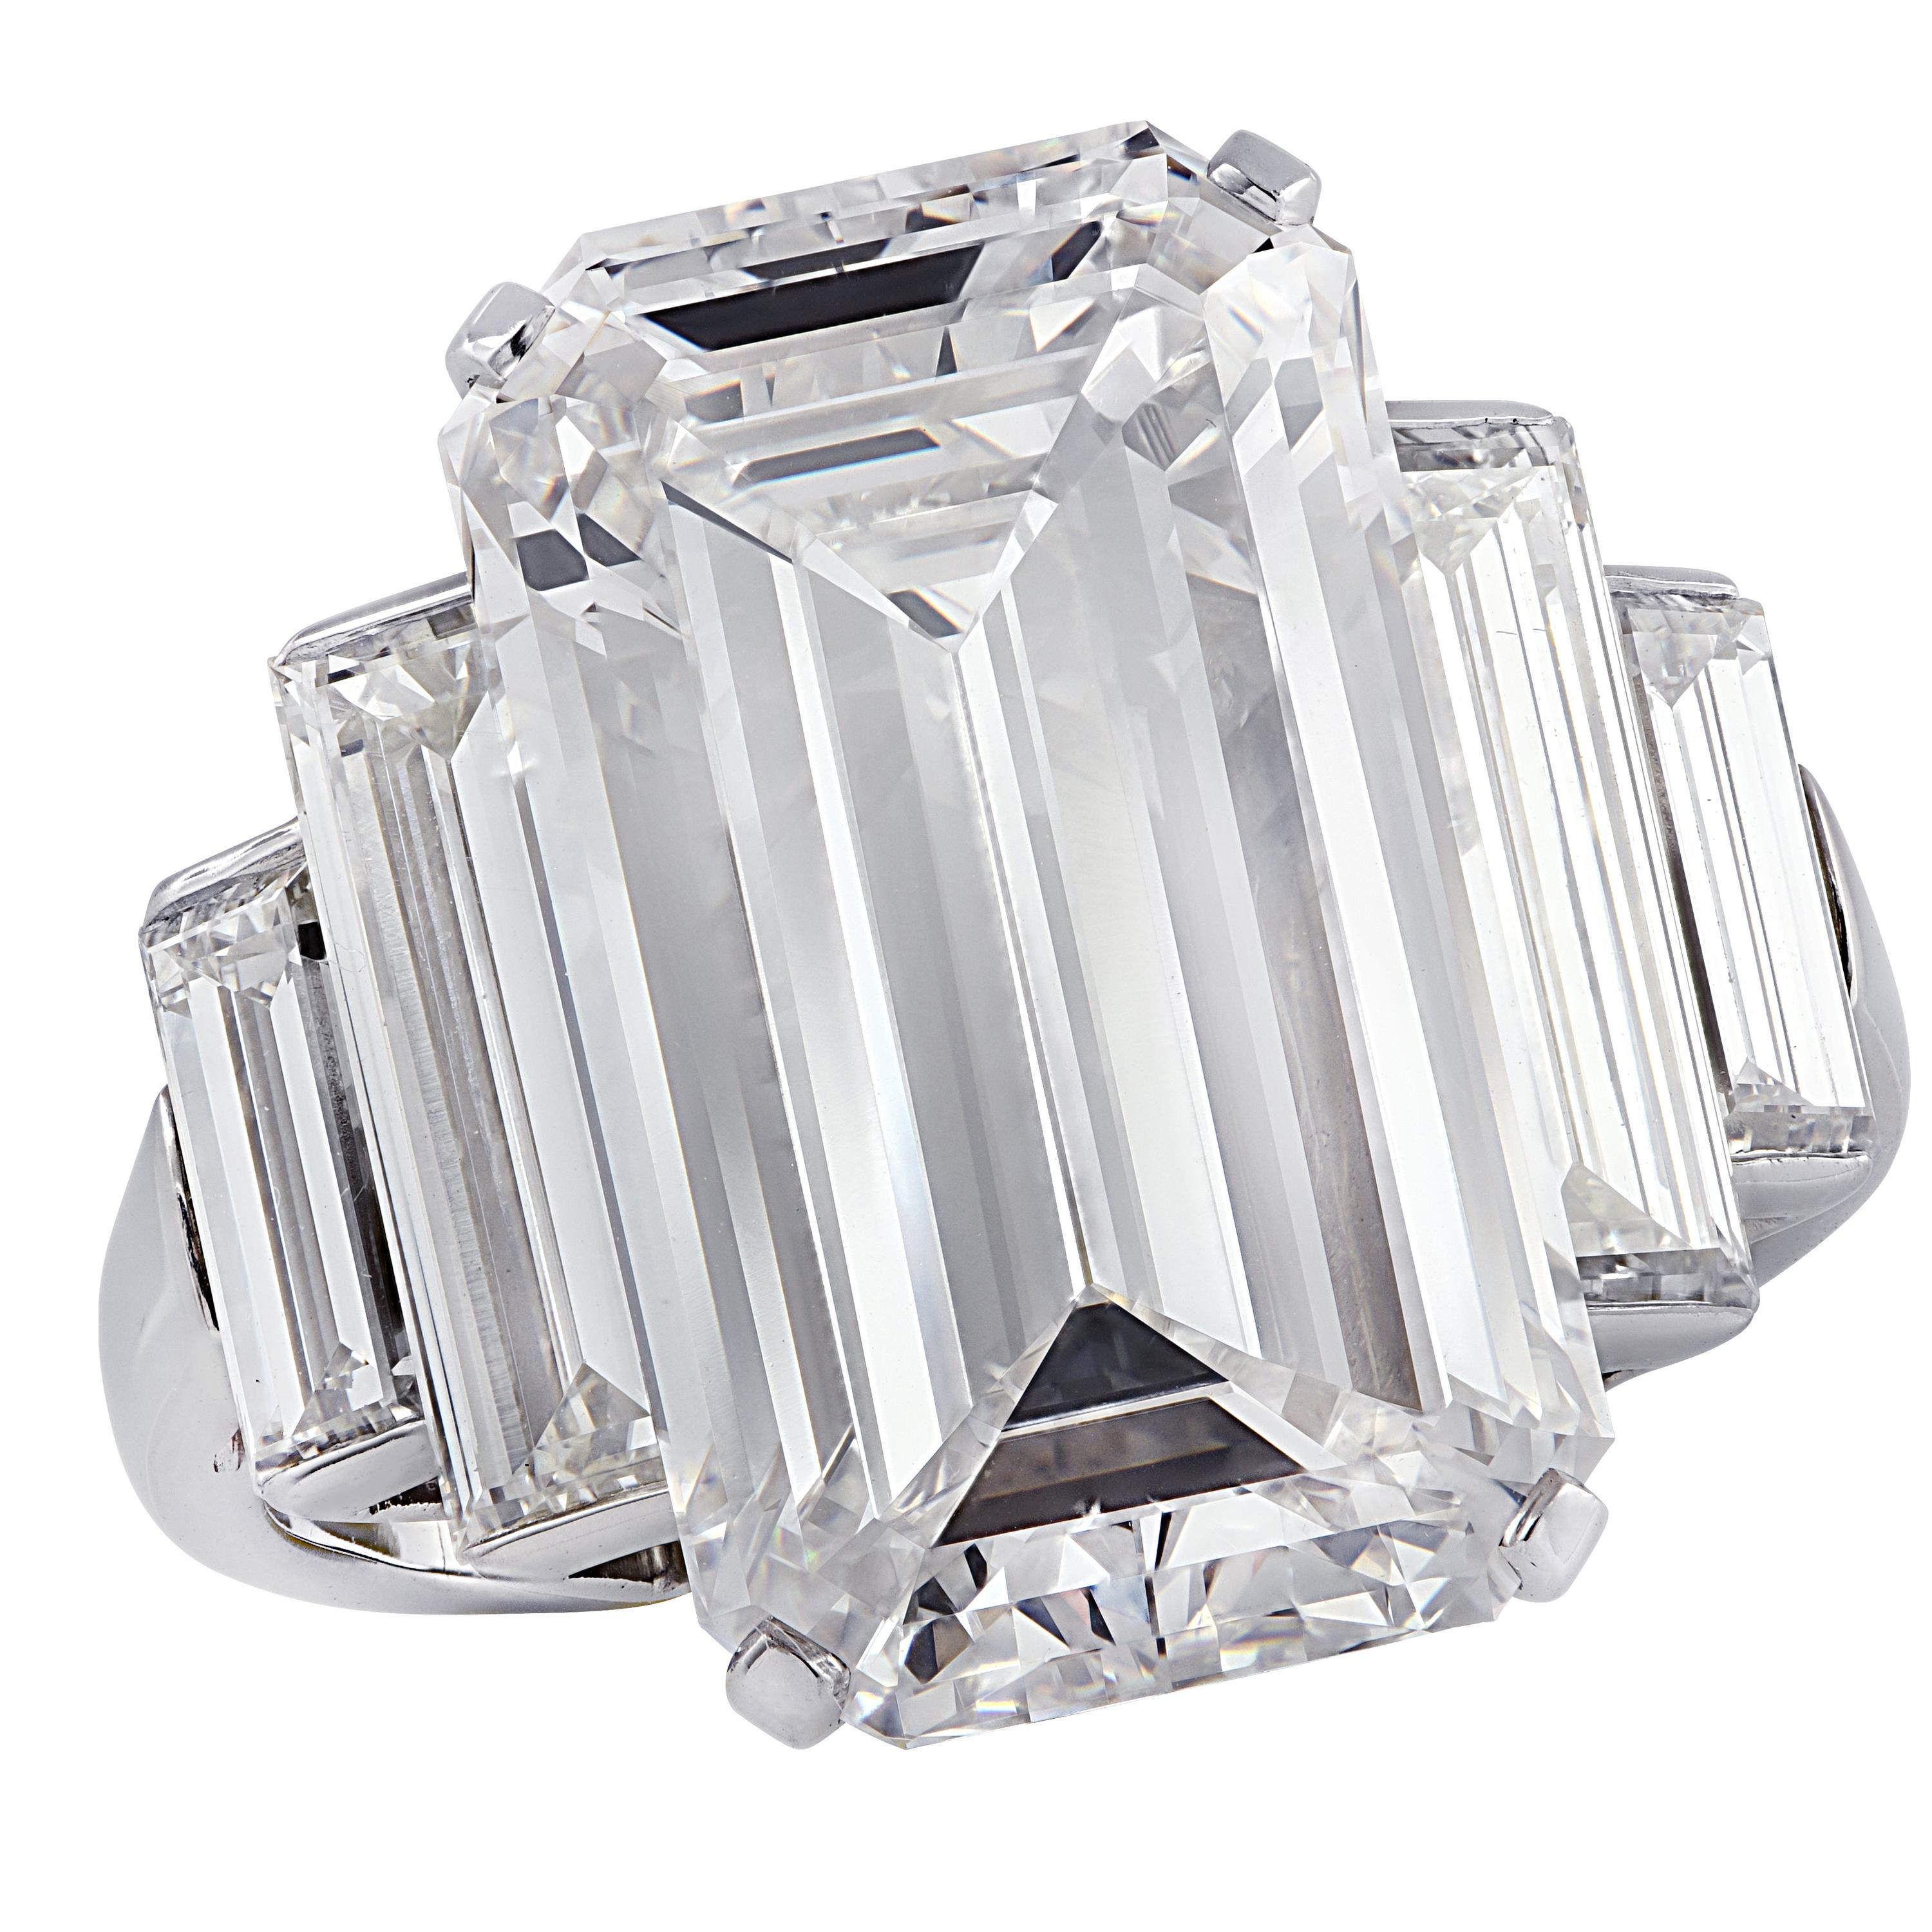 Bulgari GIA Certified 9.46 Carat Emerald Cut Diamond Engagement Ring